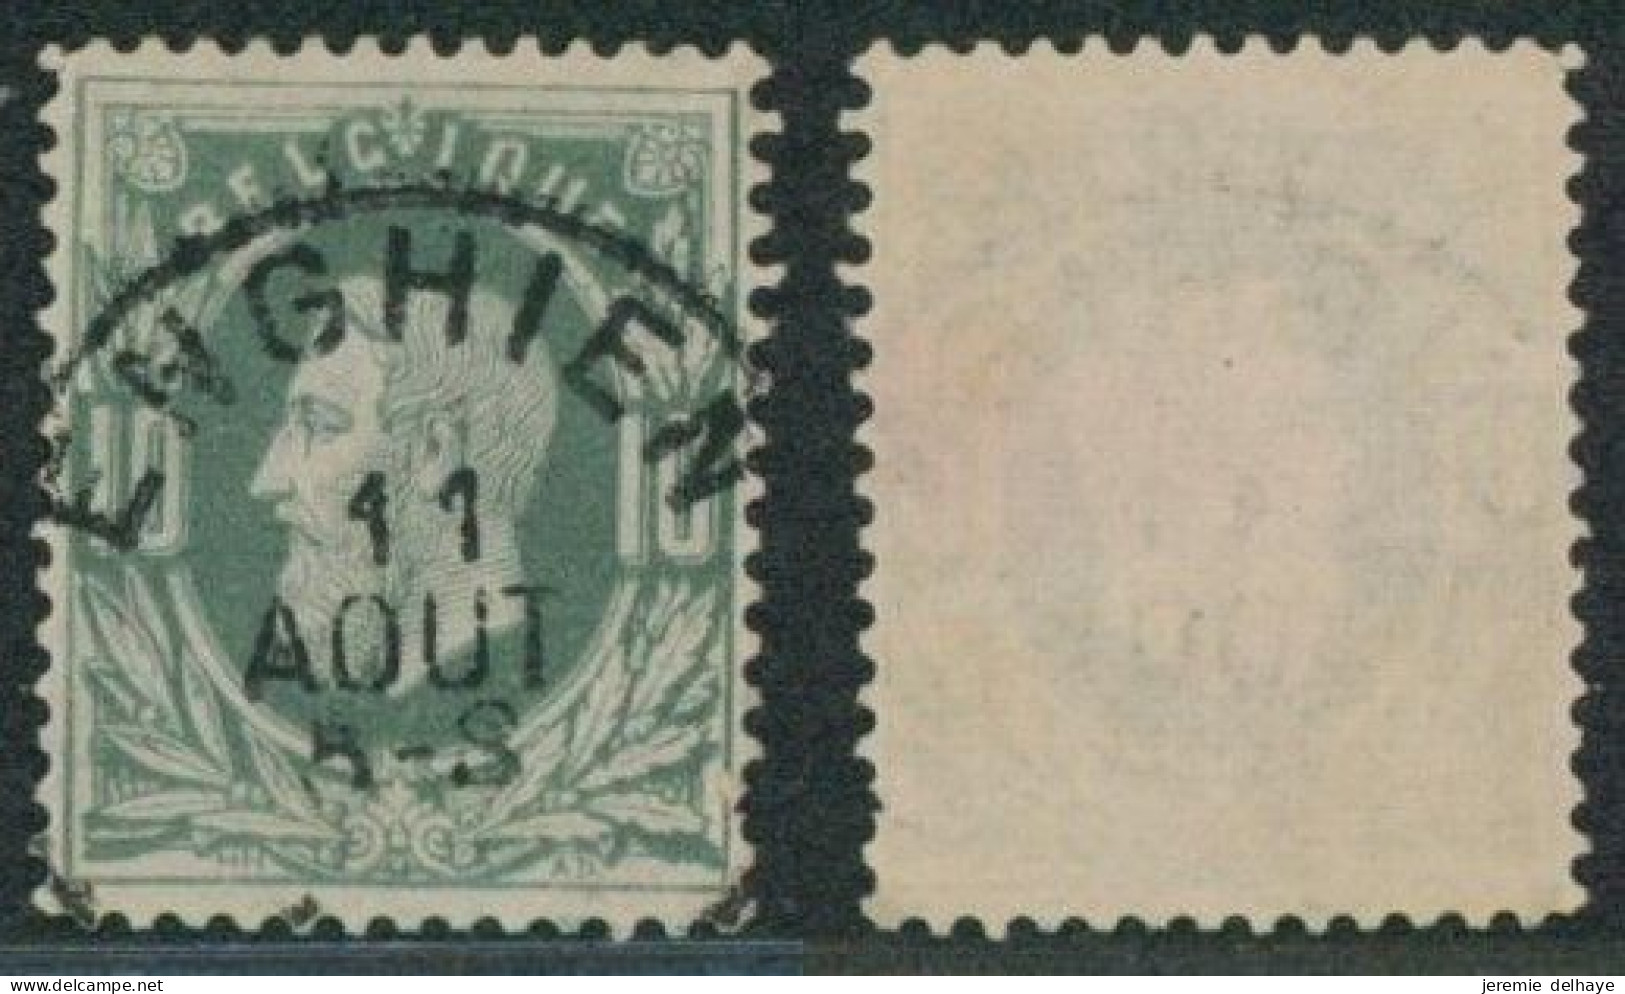 émission 1869 - N°30 Obl Simple Cercle "Enghien".  // (AD) - 1869-1883 Leopold II.